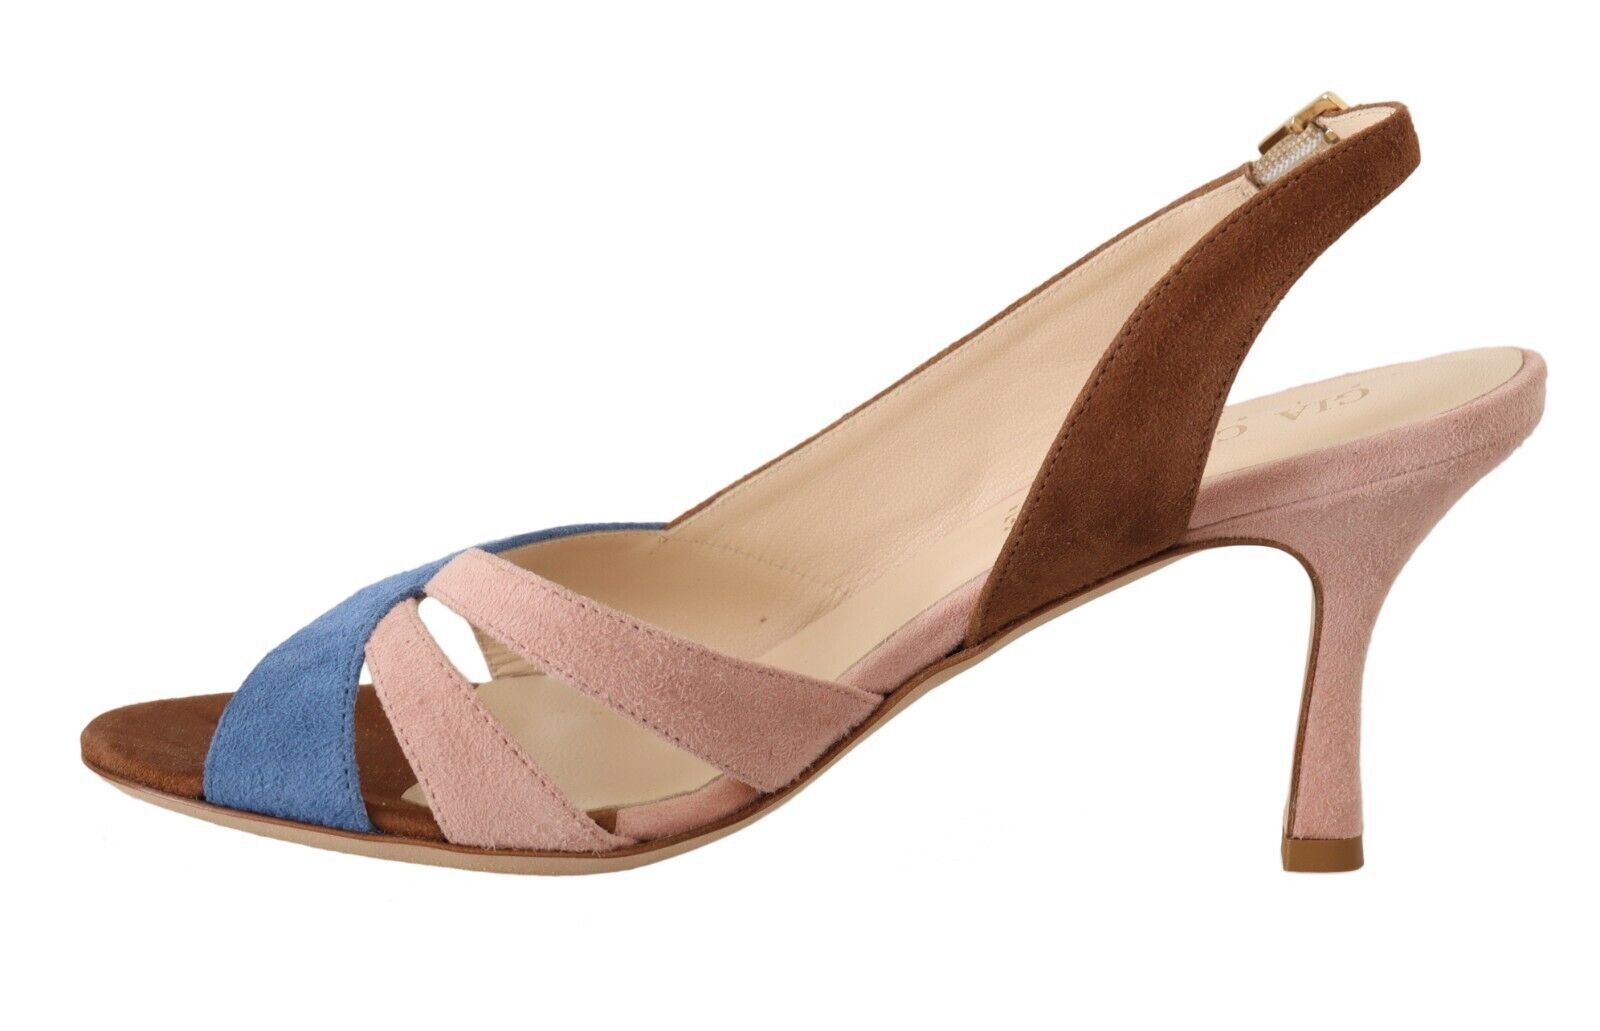 GIA COUTURE Multicolor Suede Leather Slingback Heels Sandals Shoes - Fizigo